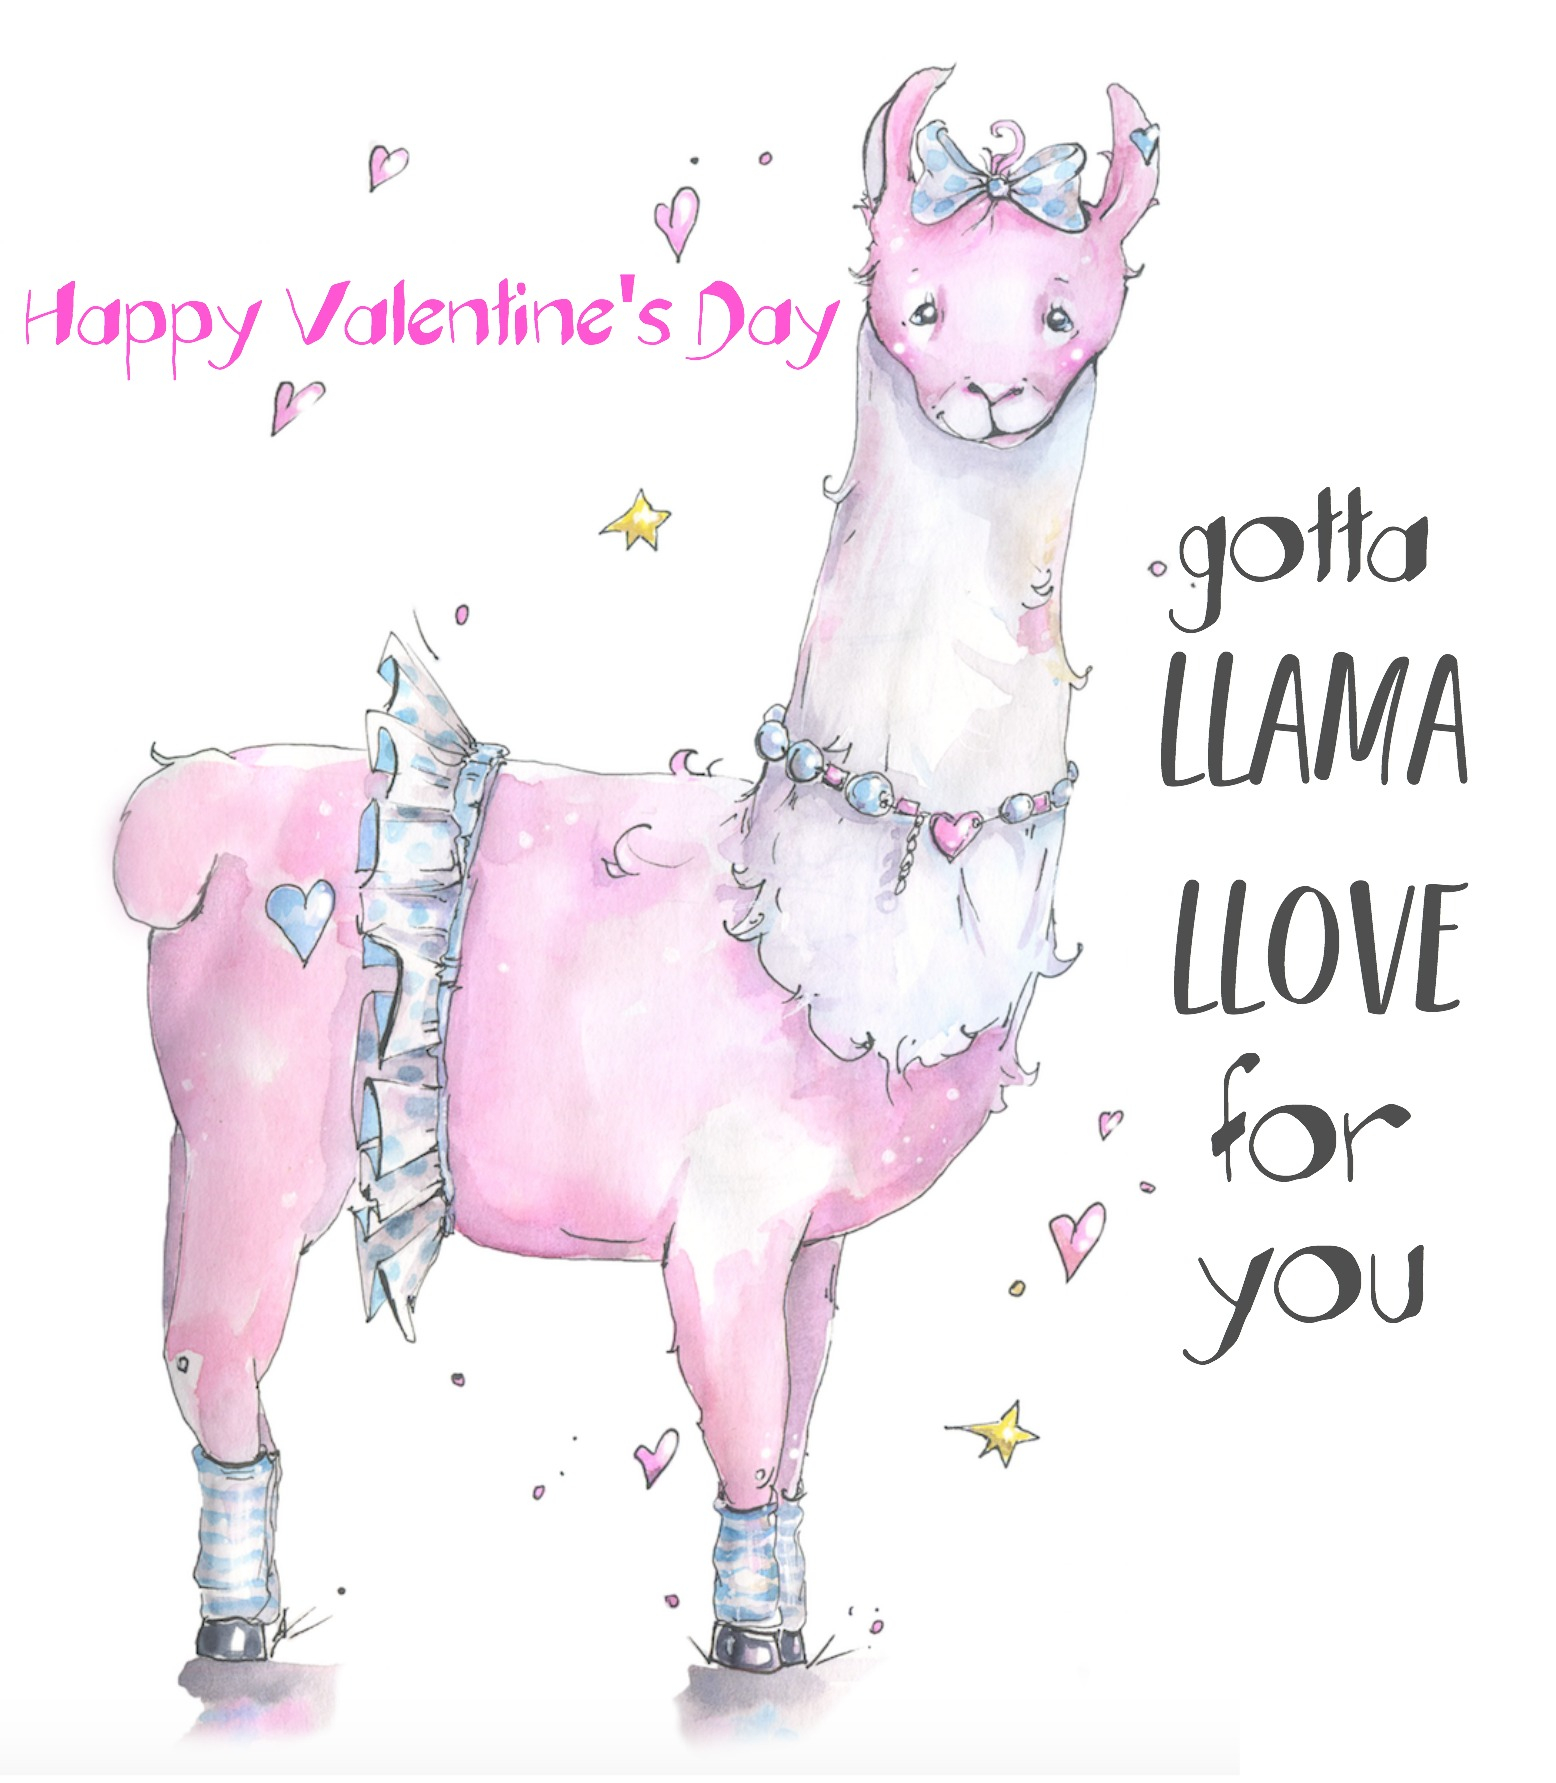 Llama Llove Valentine Card Printable